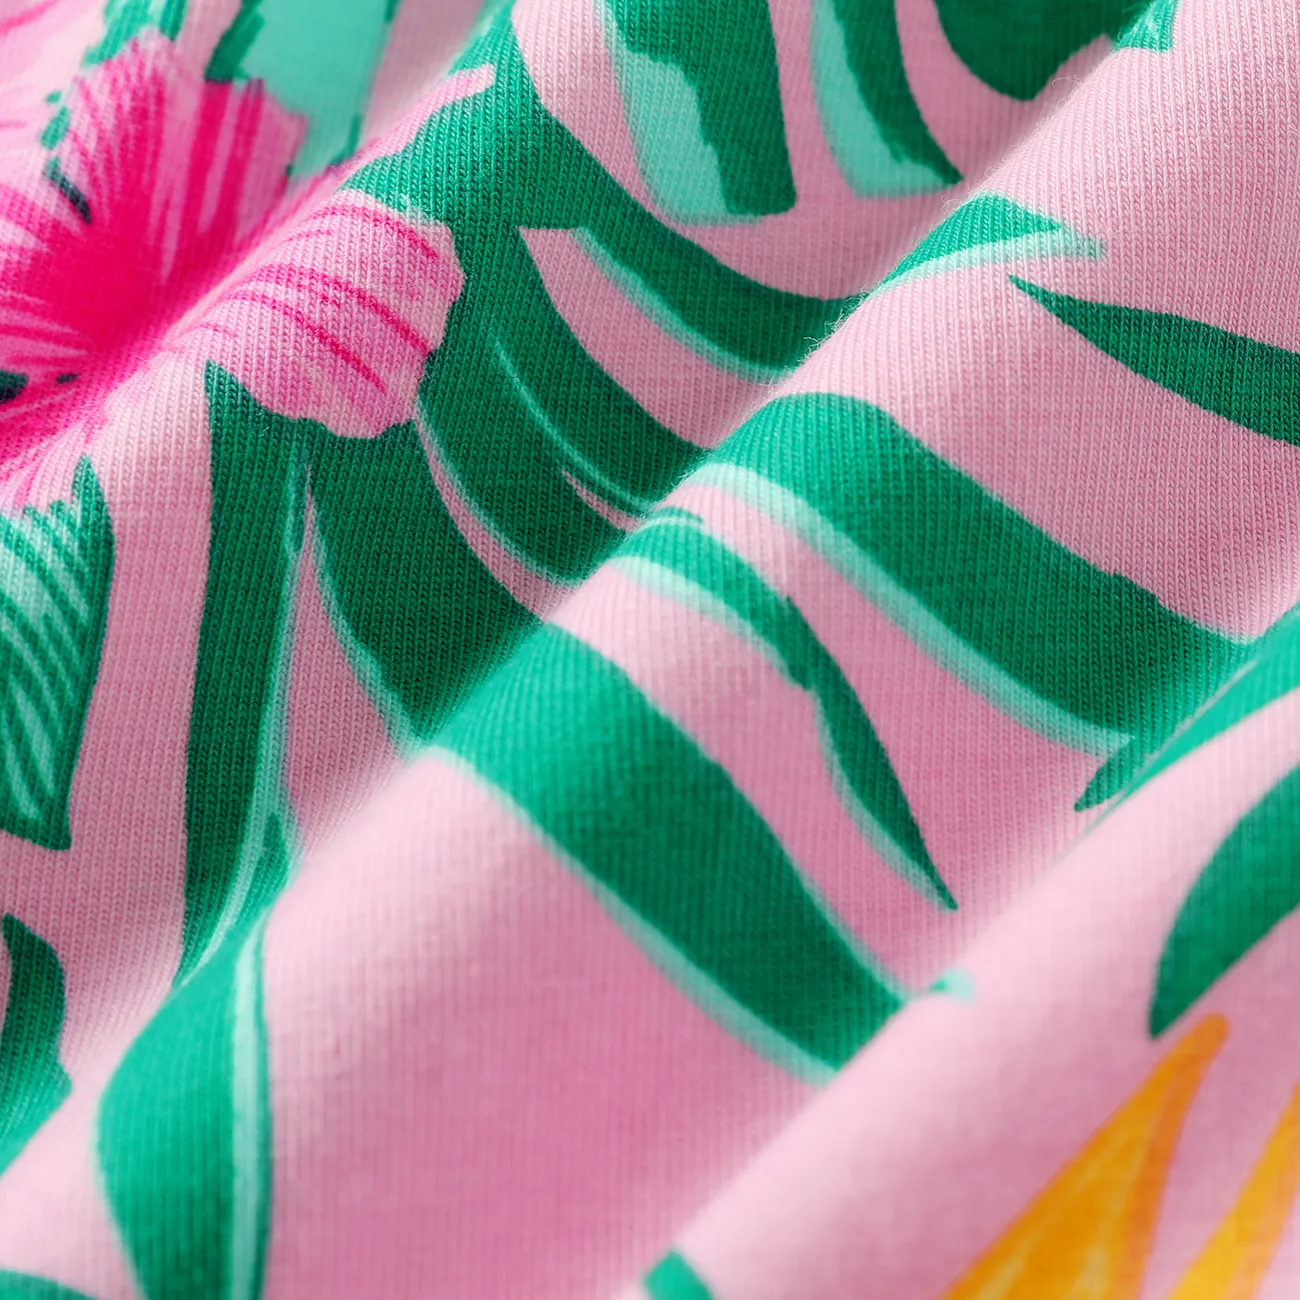 PAW Patrol Toddler Girl Cotton Floral Print Splice Belted Sleeveless Ropmers Pink big image 1